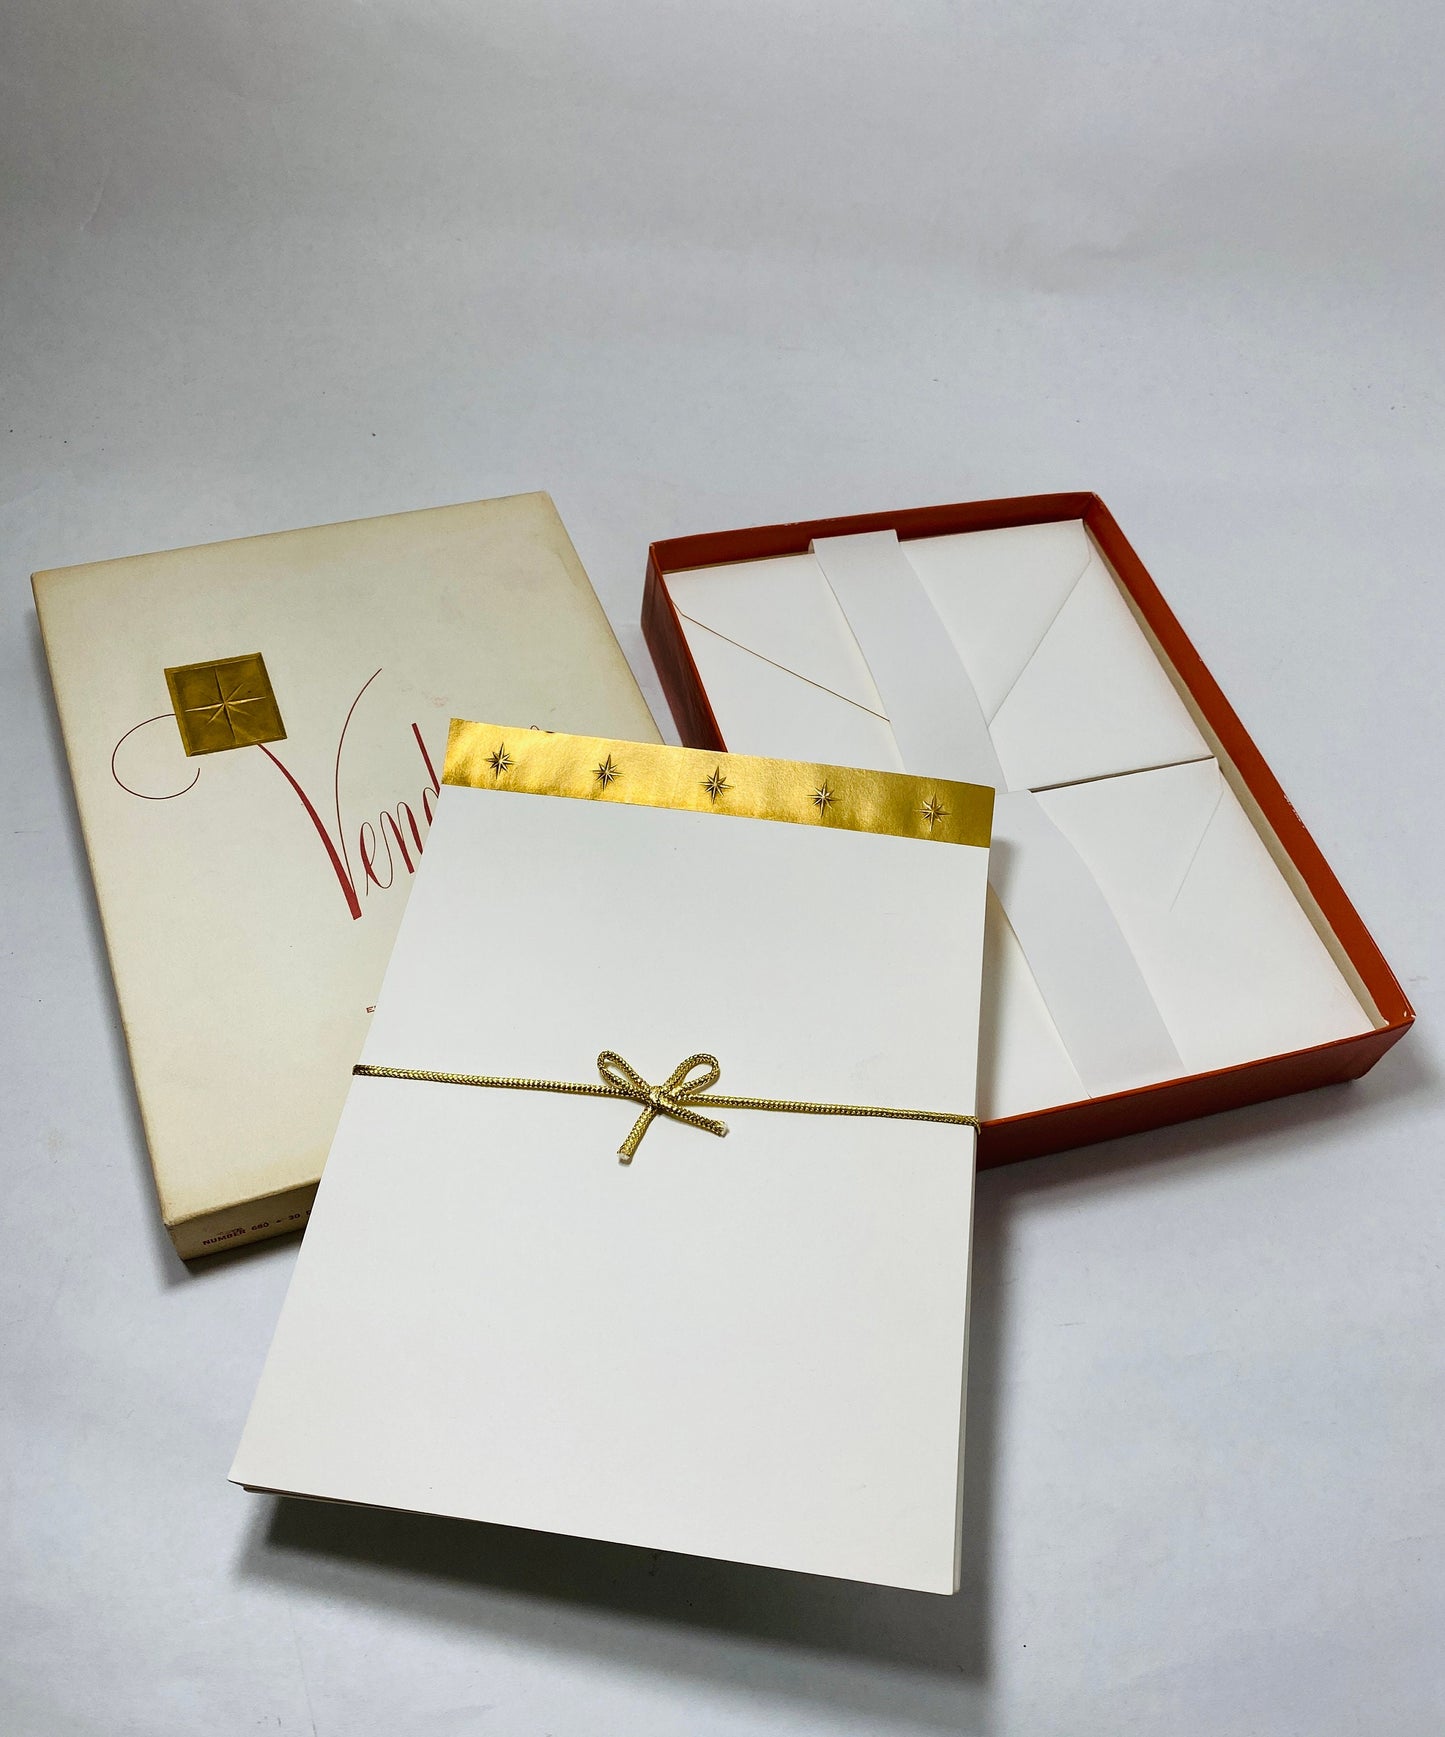 Vintage mid century modern UNUSED Starburst stationary gold Set lovely letter note paper with envelopes MCM circa 1960s 680 Vendome embossed